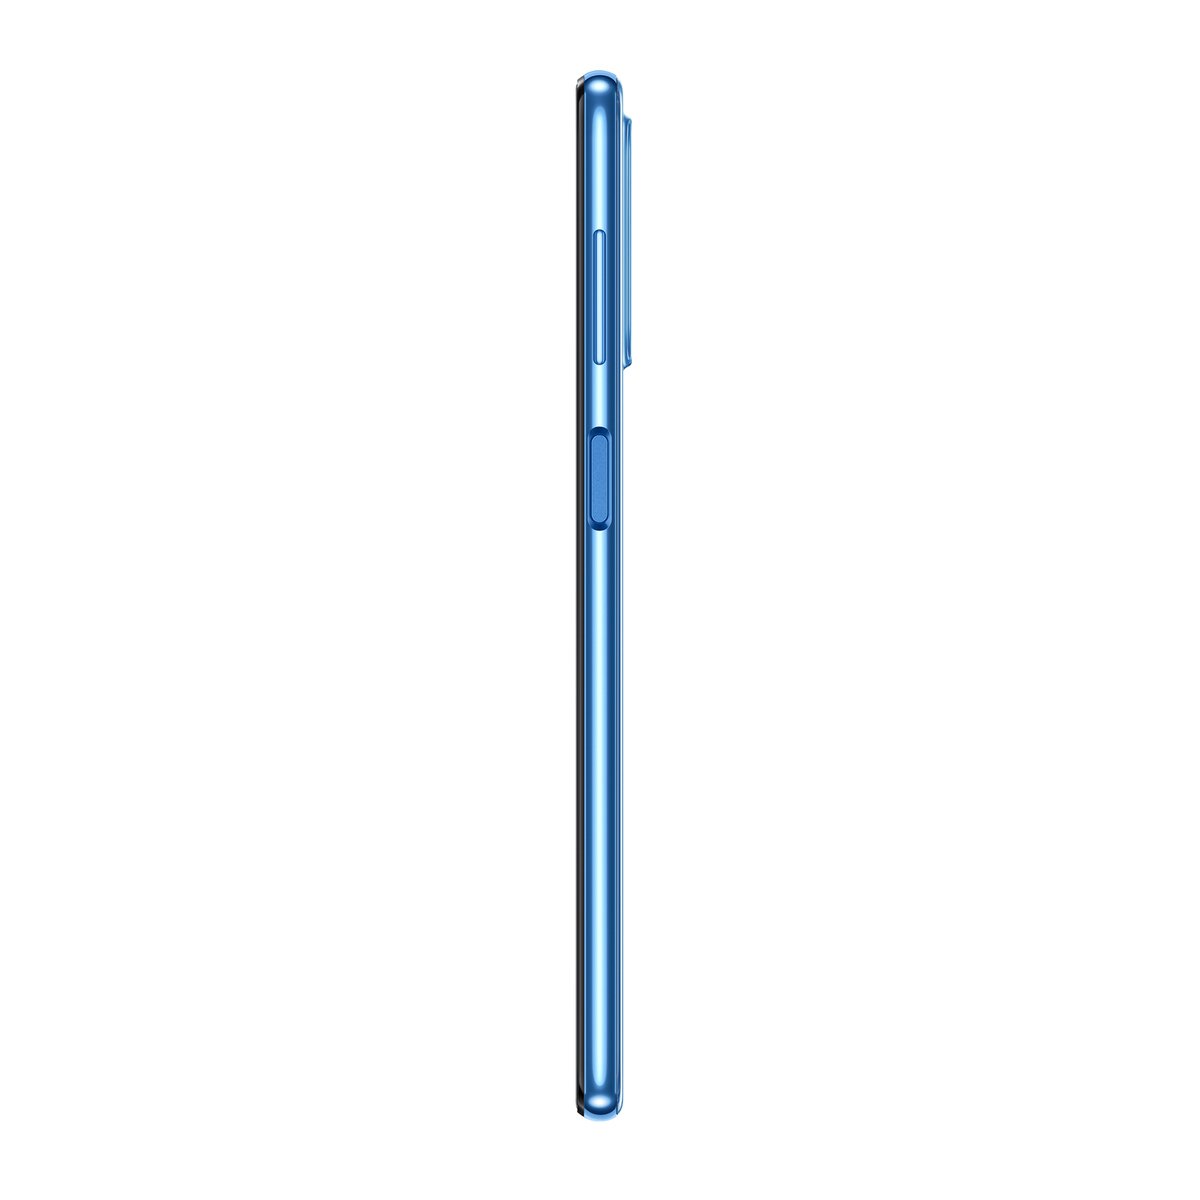 Samsung Galaxy M52,5G Dual SIM Smartphone, 128GB Storage and 8GB RAM, Light Blue